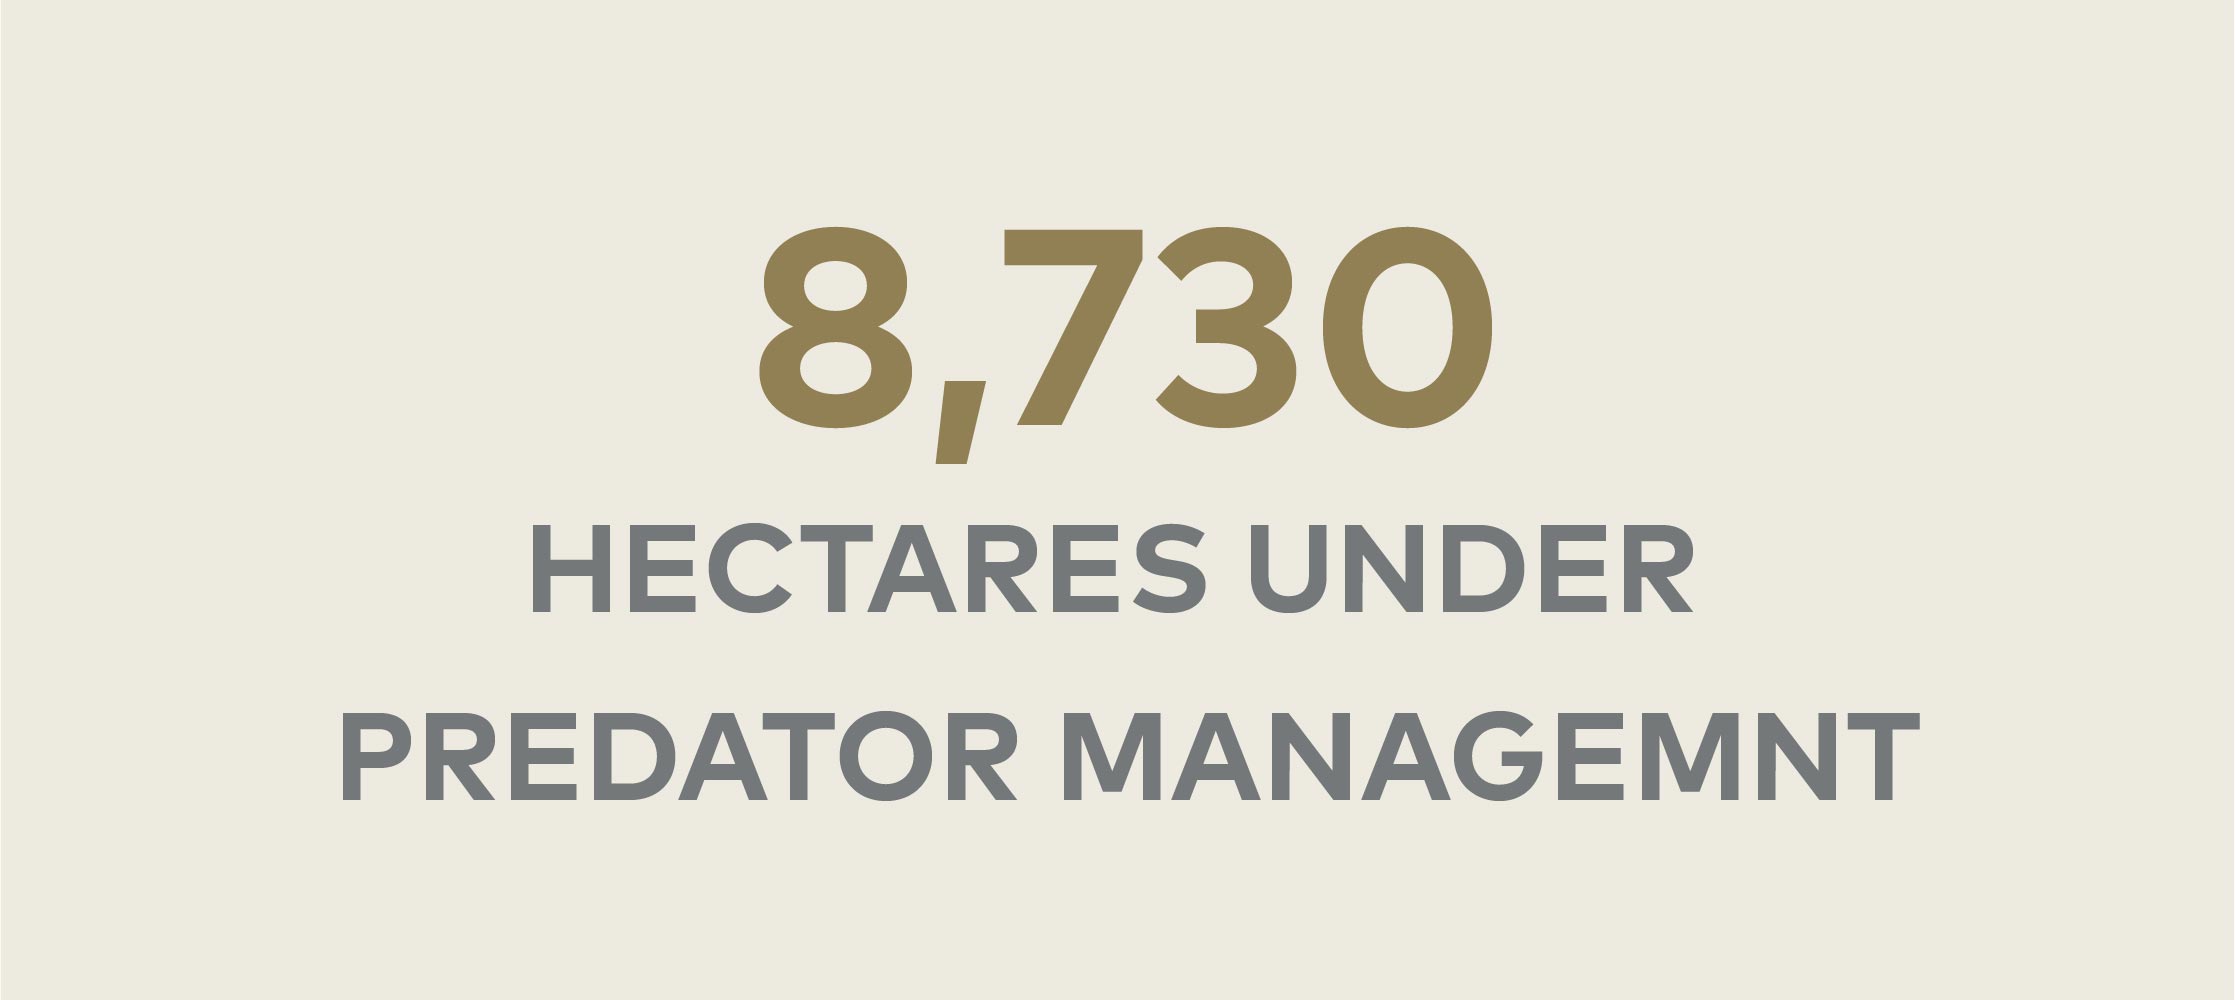 8730 hectares unders predator management